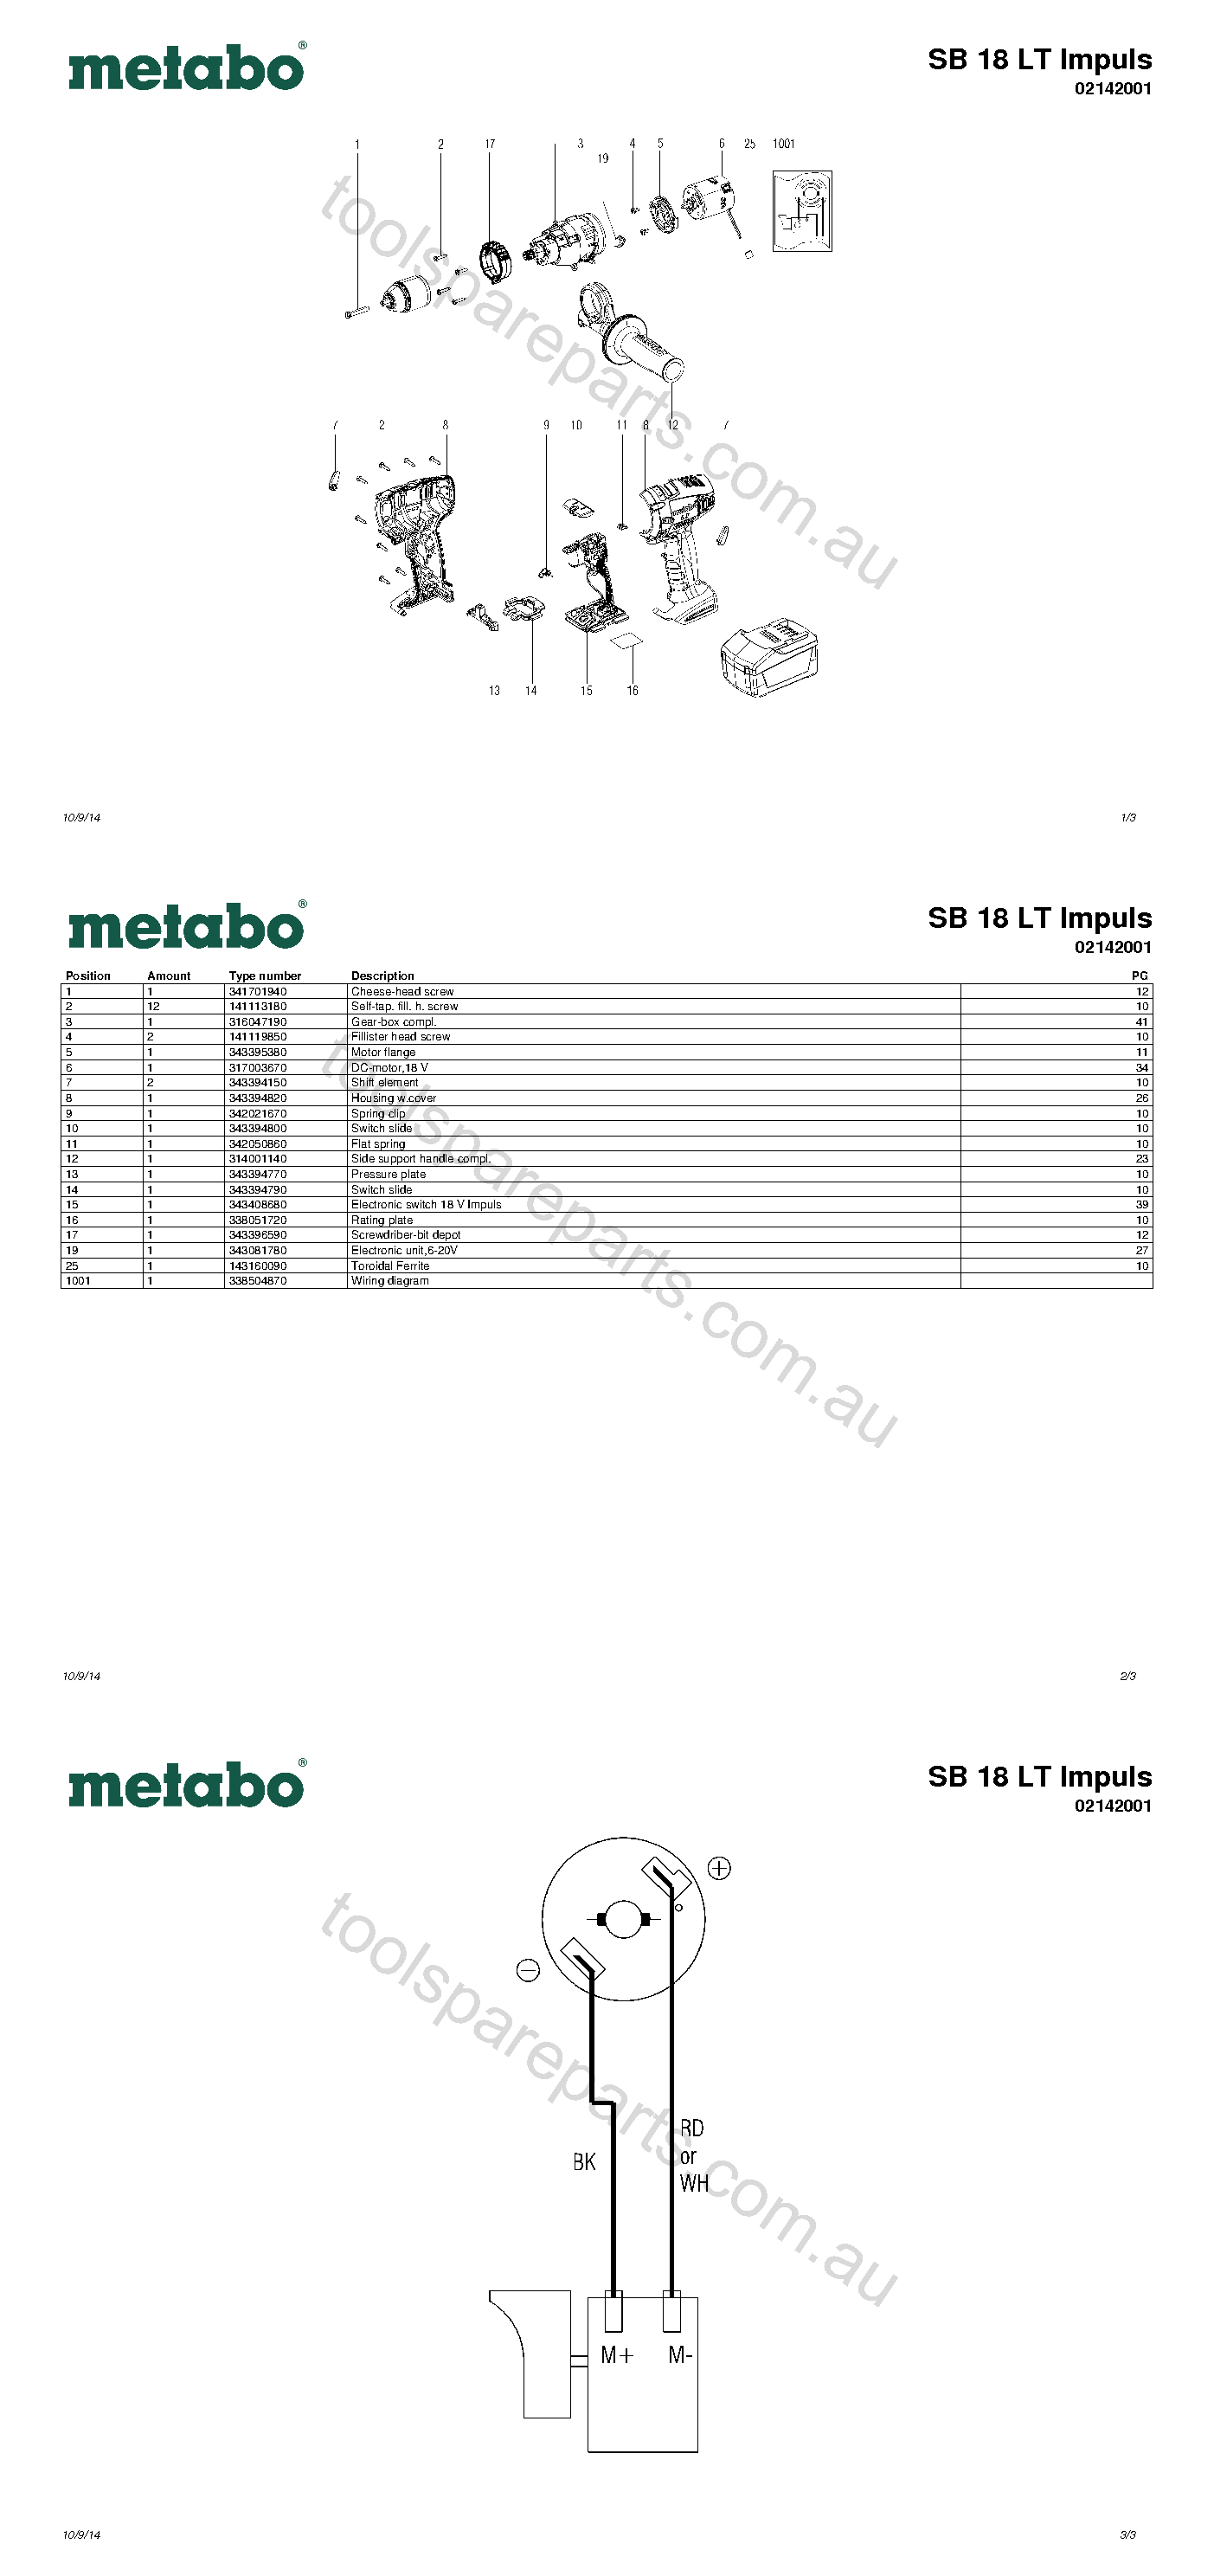 Metabo SB 18 LT Impuls 02142001  Diagram 1